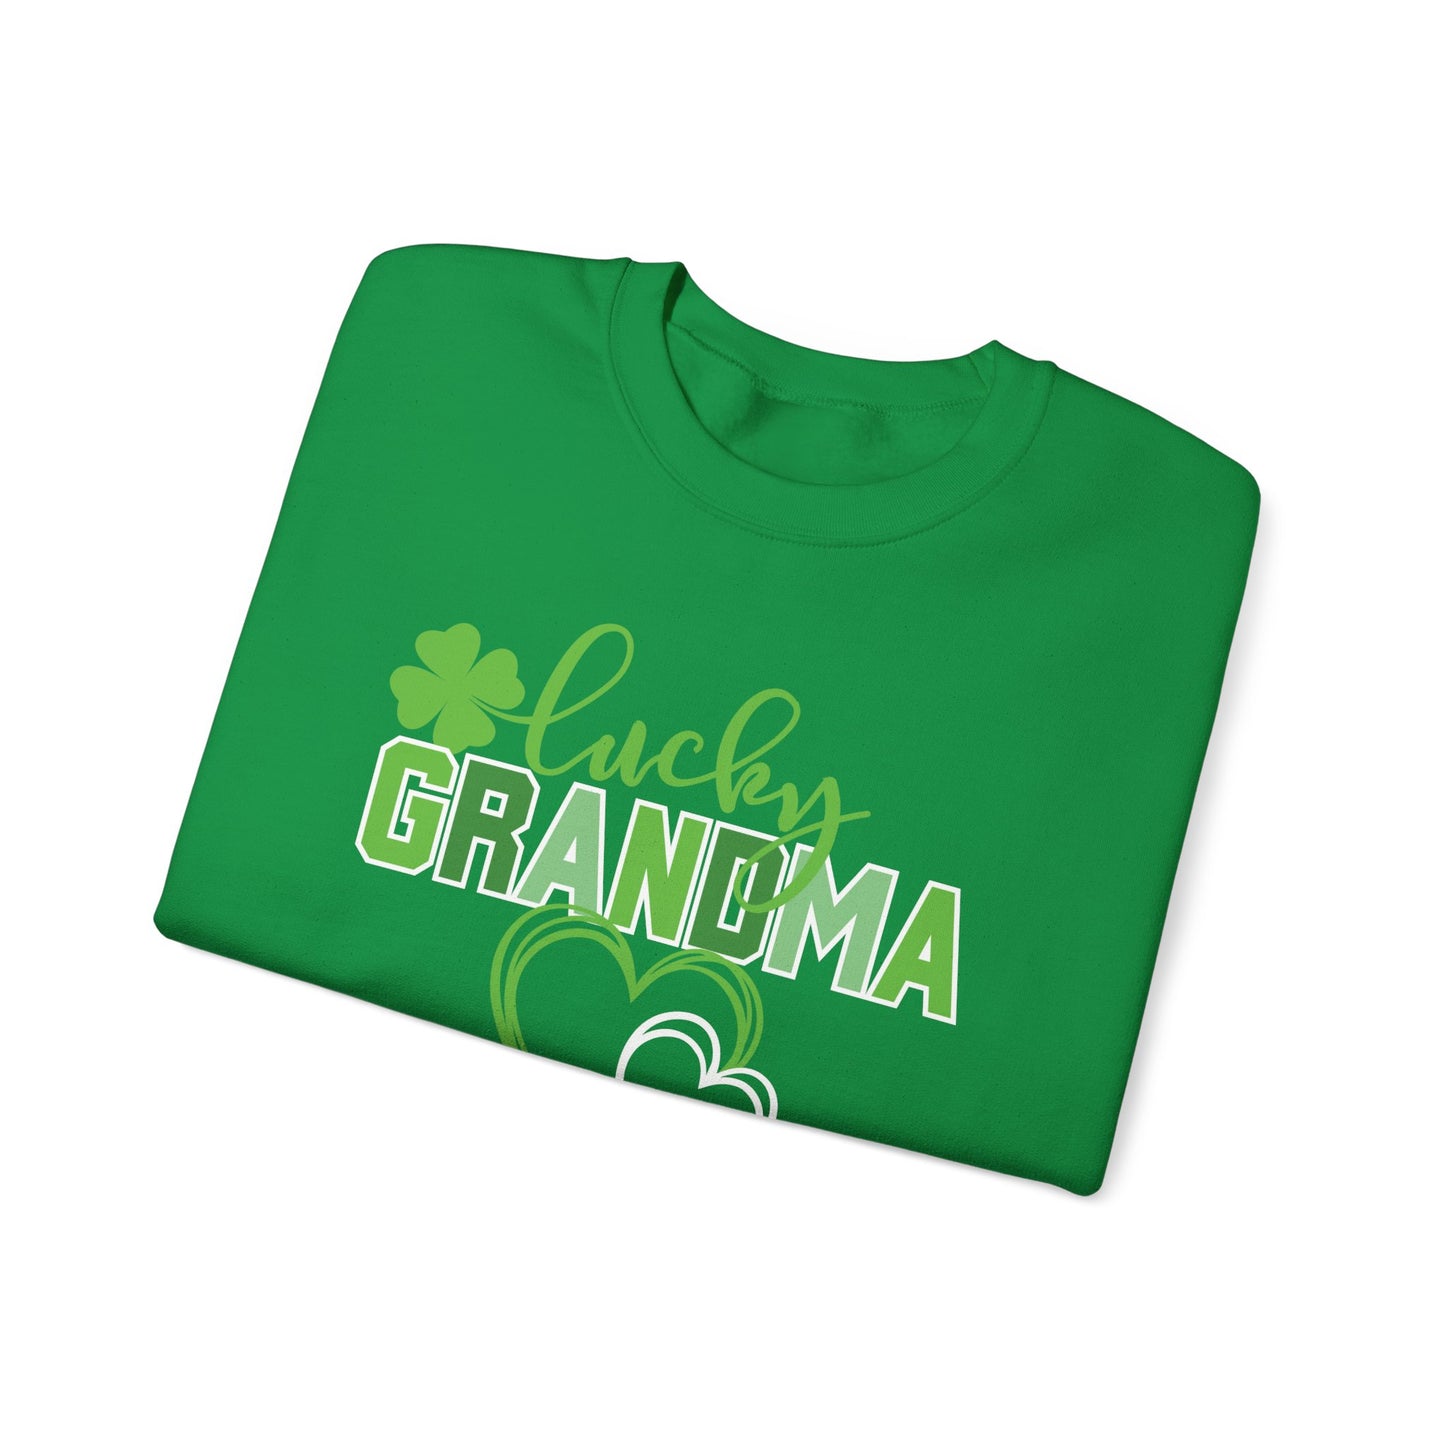 St. Patrick's Day Sweatshirt for Grandma | Personalized Grandma Sweatshirt